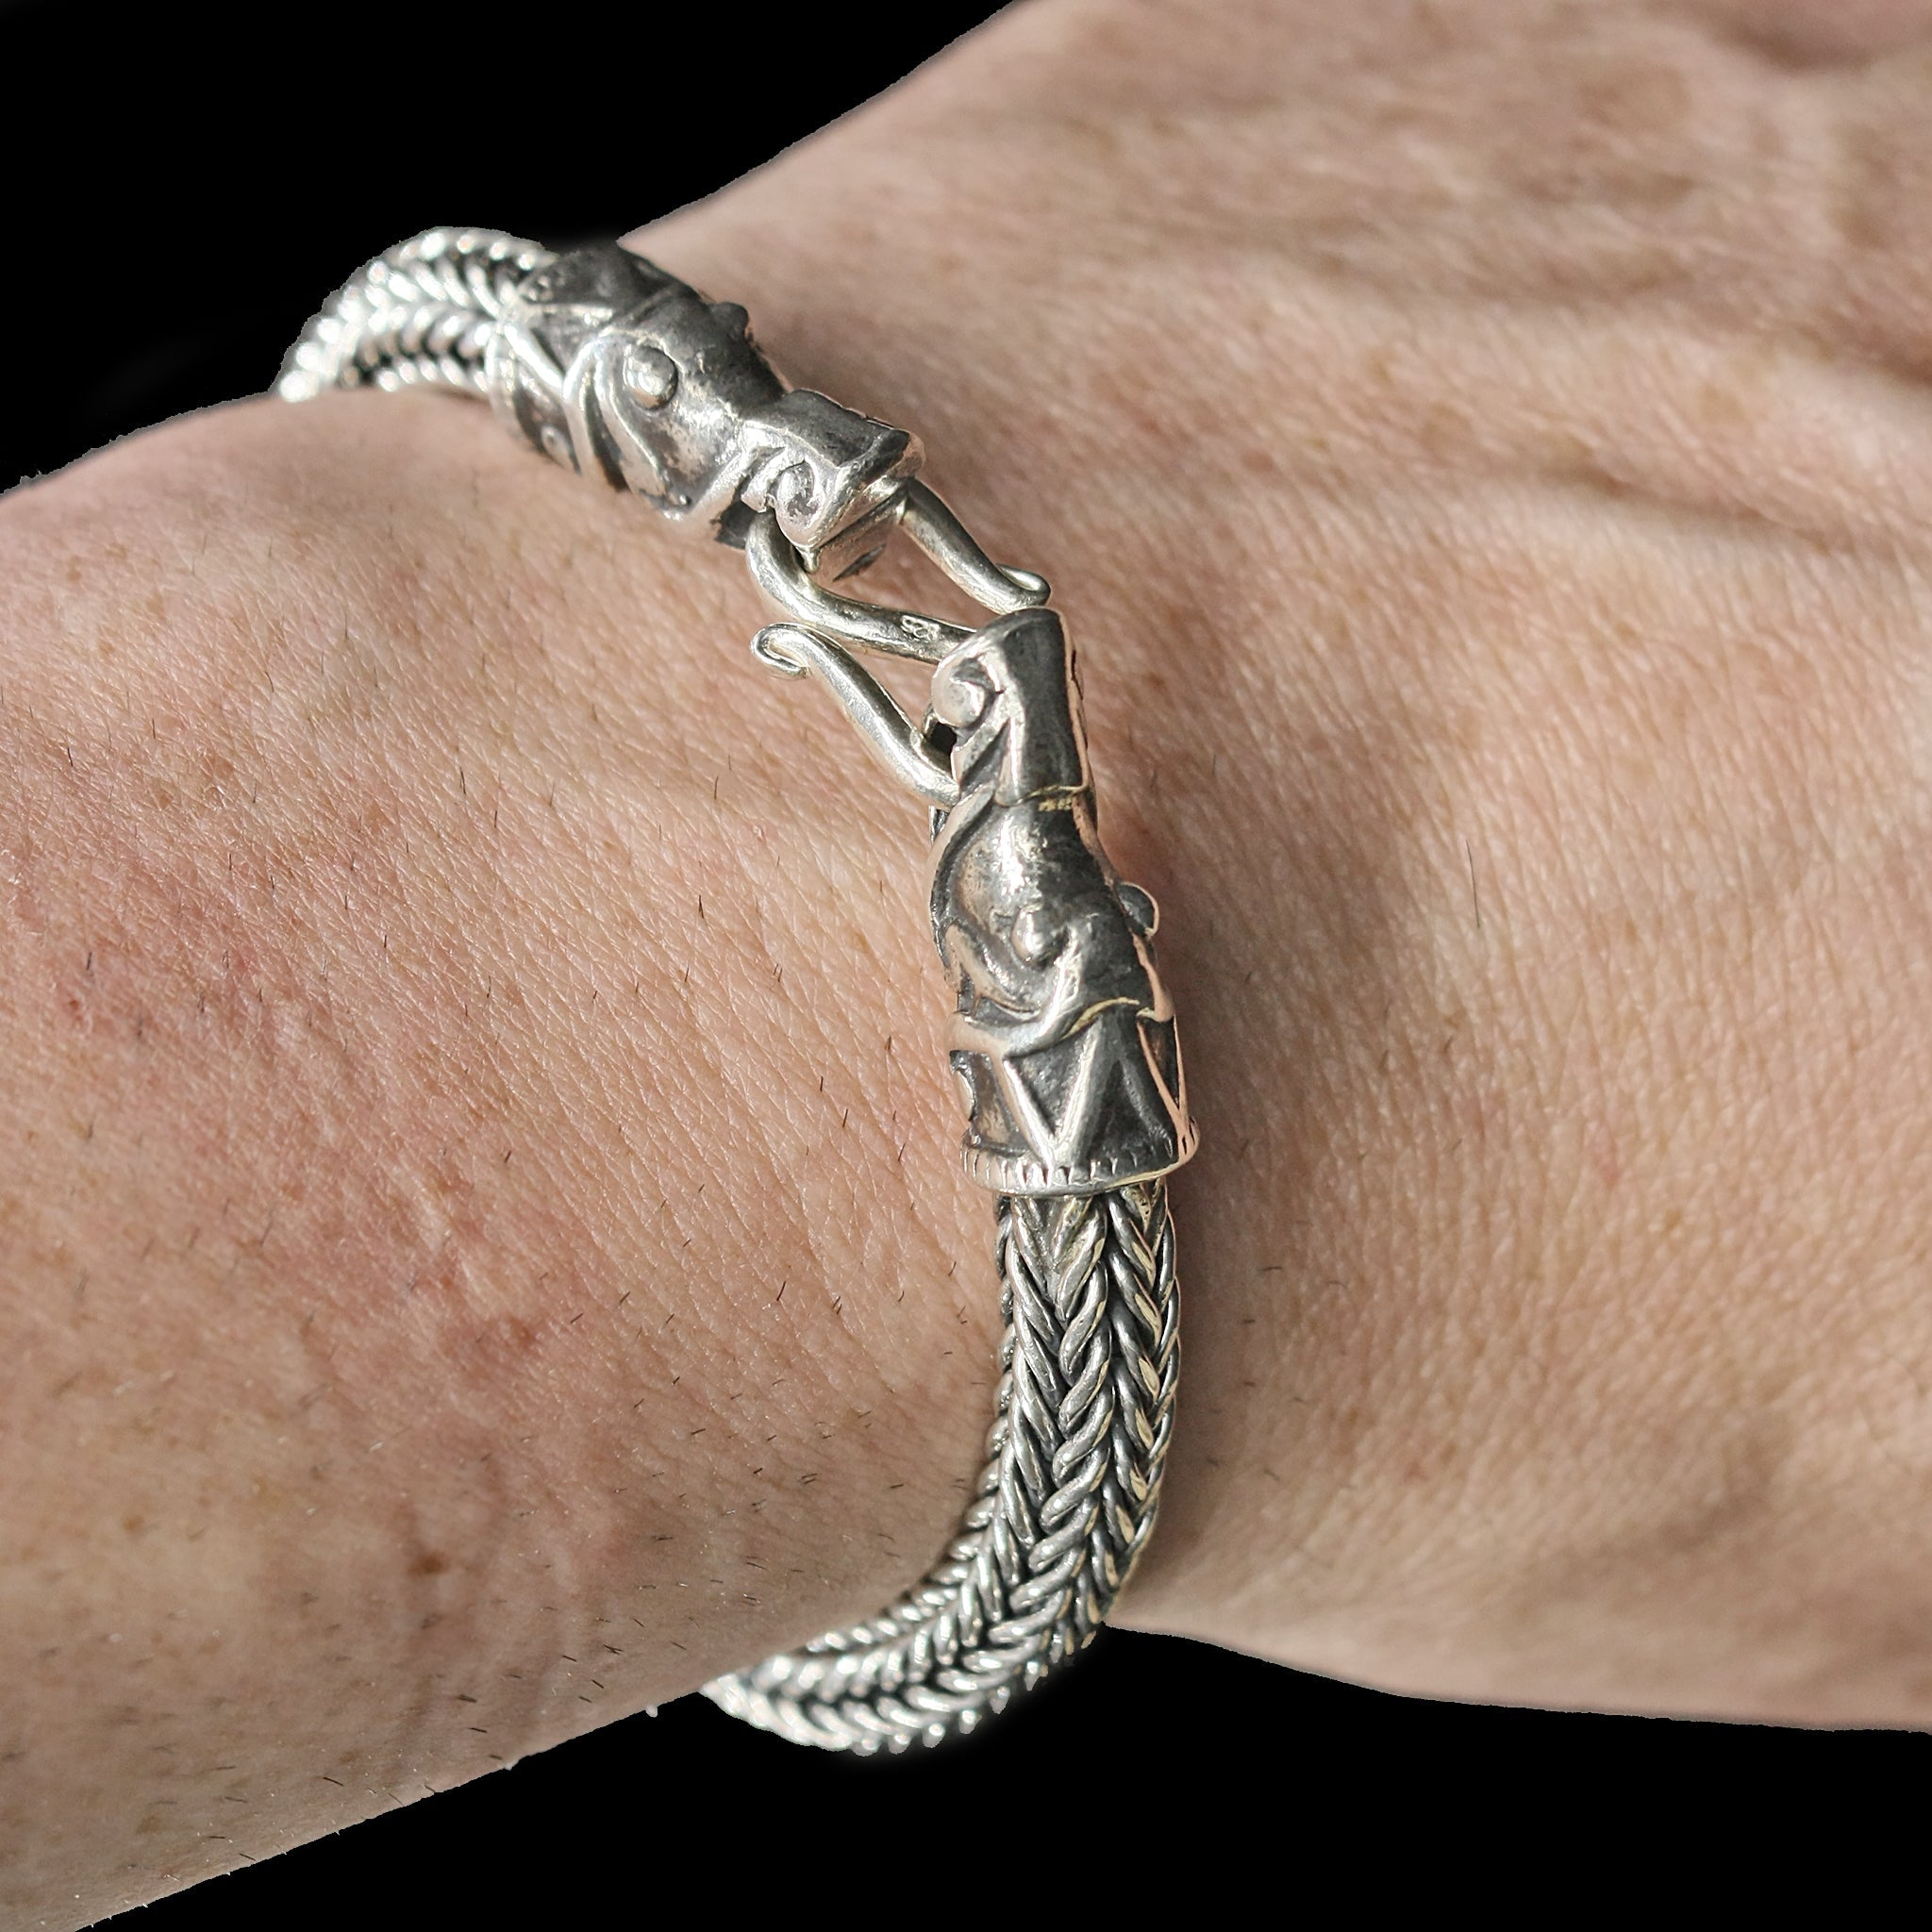 8mm Silver Snake Bracelet With Gotlandic Dragon Heads ON Wrist